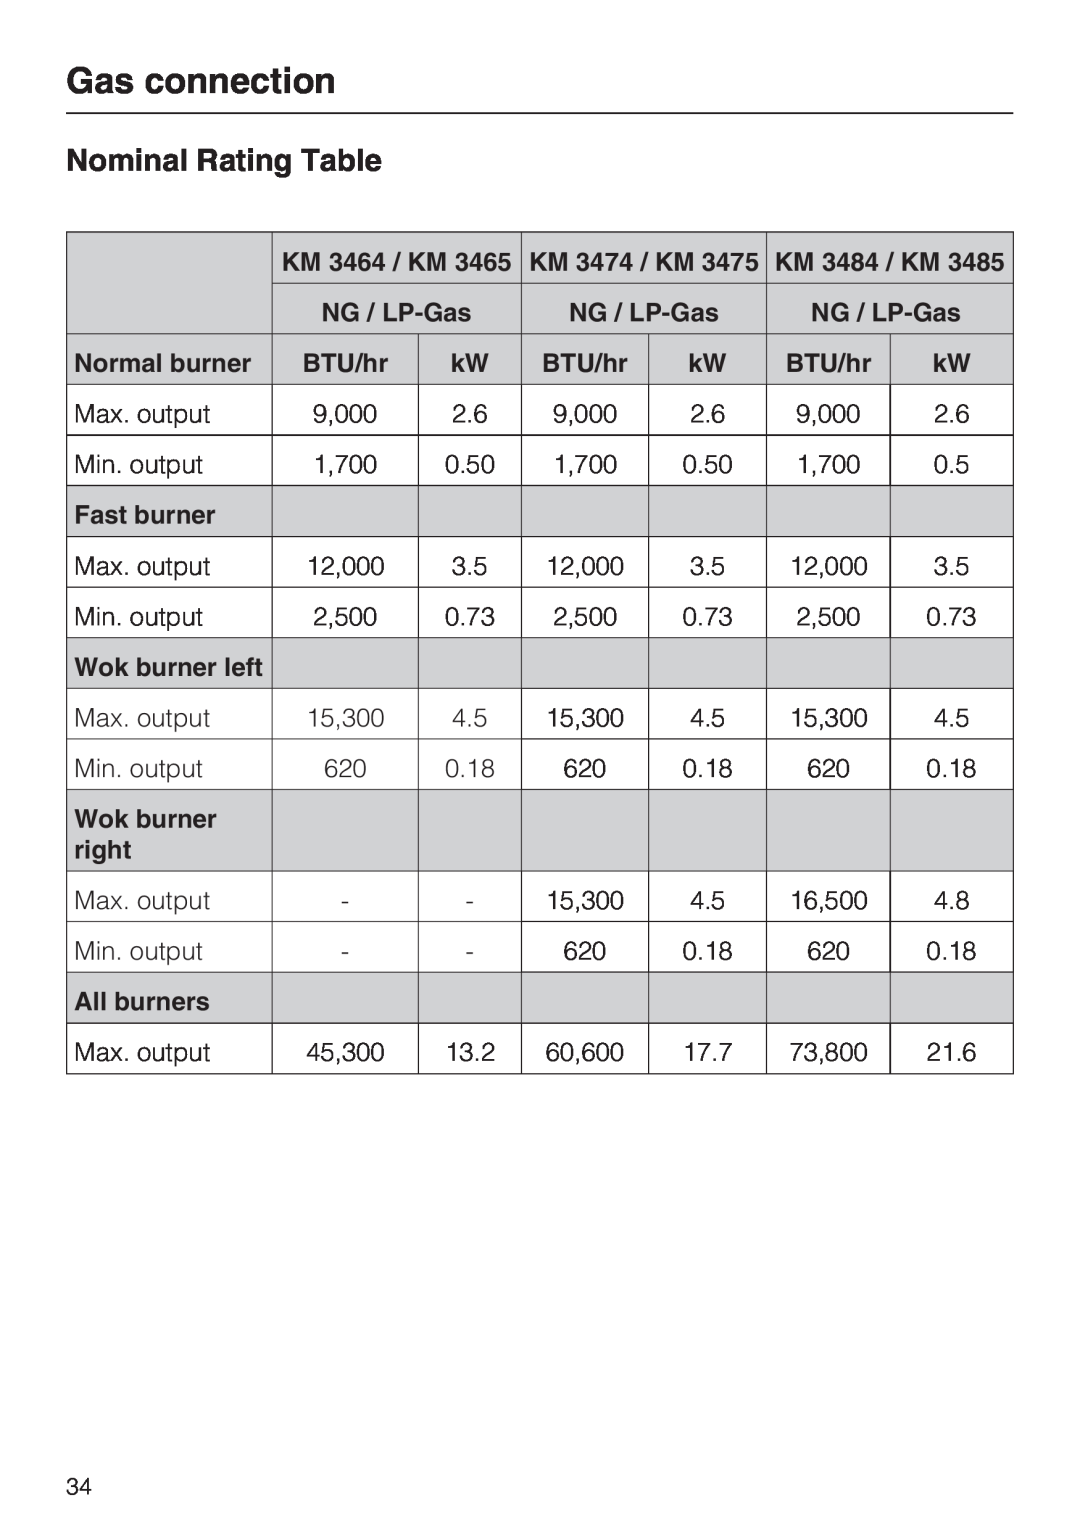 Miele KM 3465 Nominal Rating Table, KM 3464 / KM, KM 3474 / KM, KM 3484 / KM, NG / LP-Gas, Normal burner, BTU/hr, right 